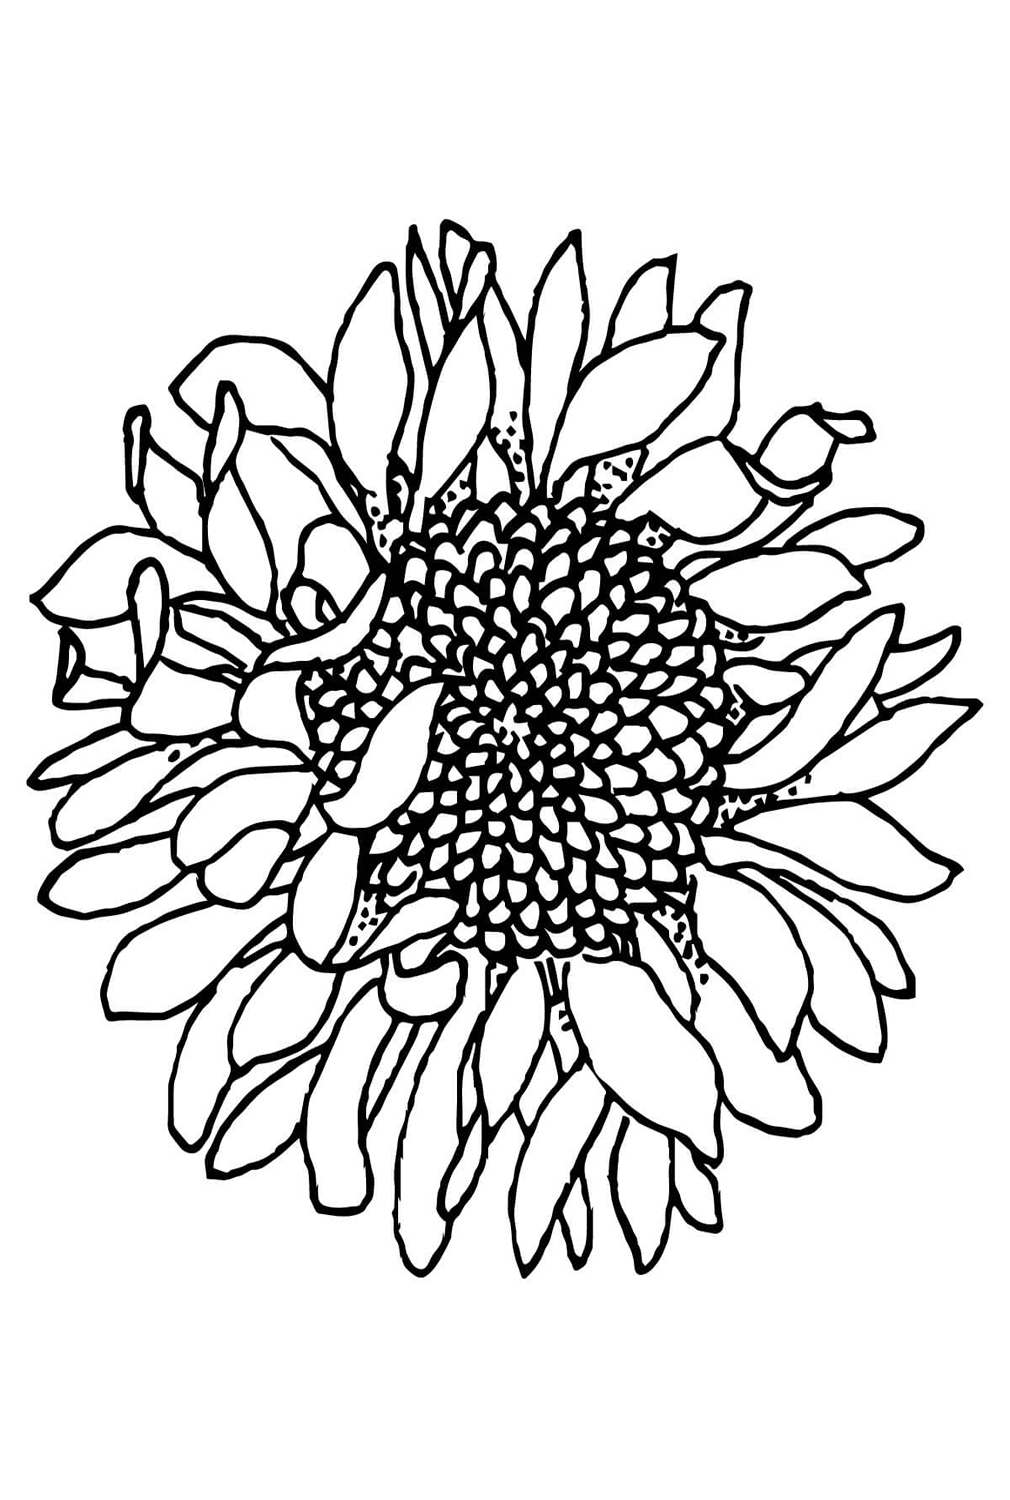 Head Of Sunflower from Sunflower